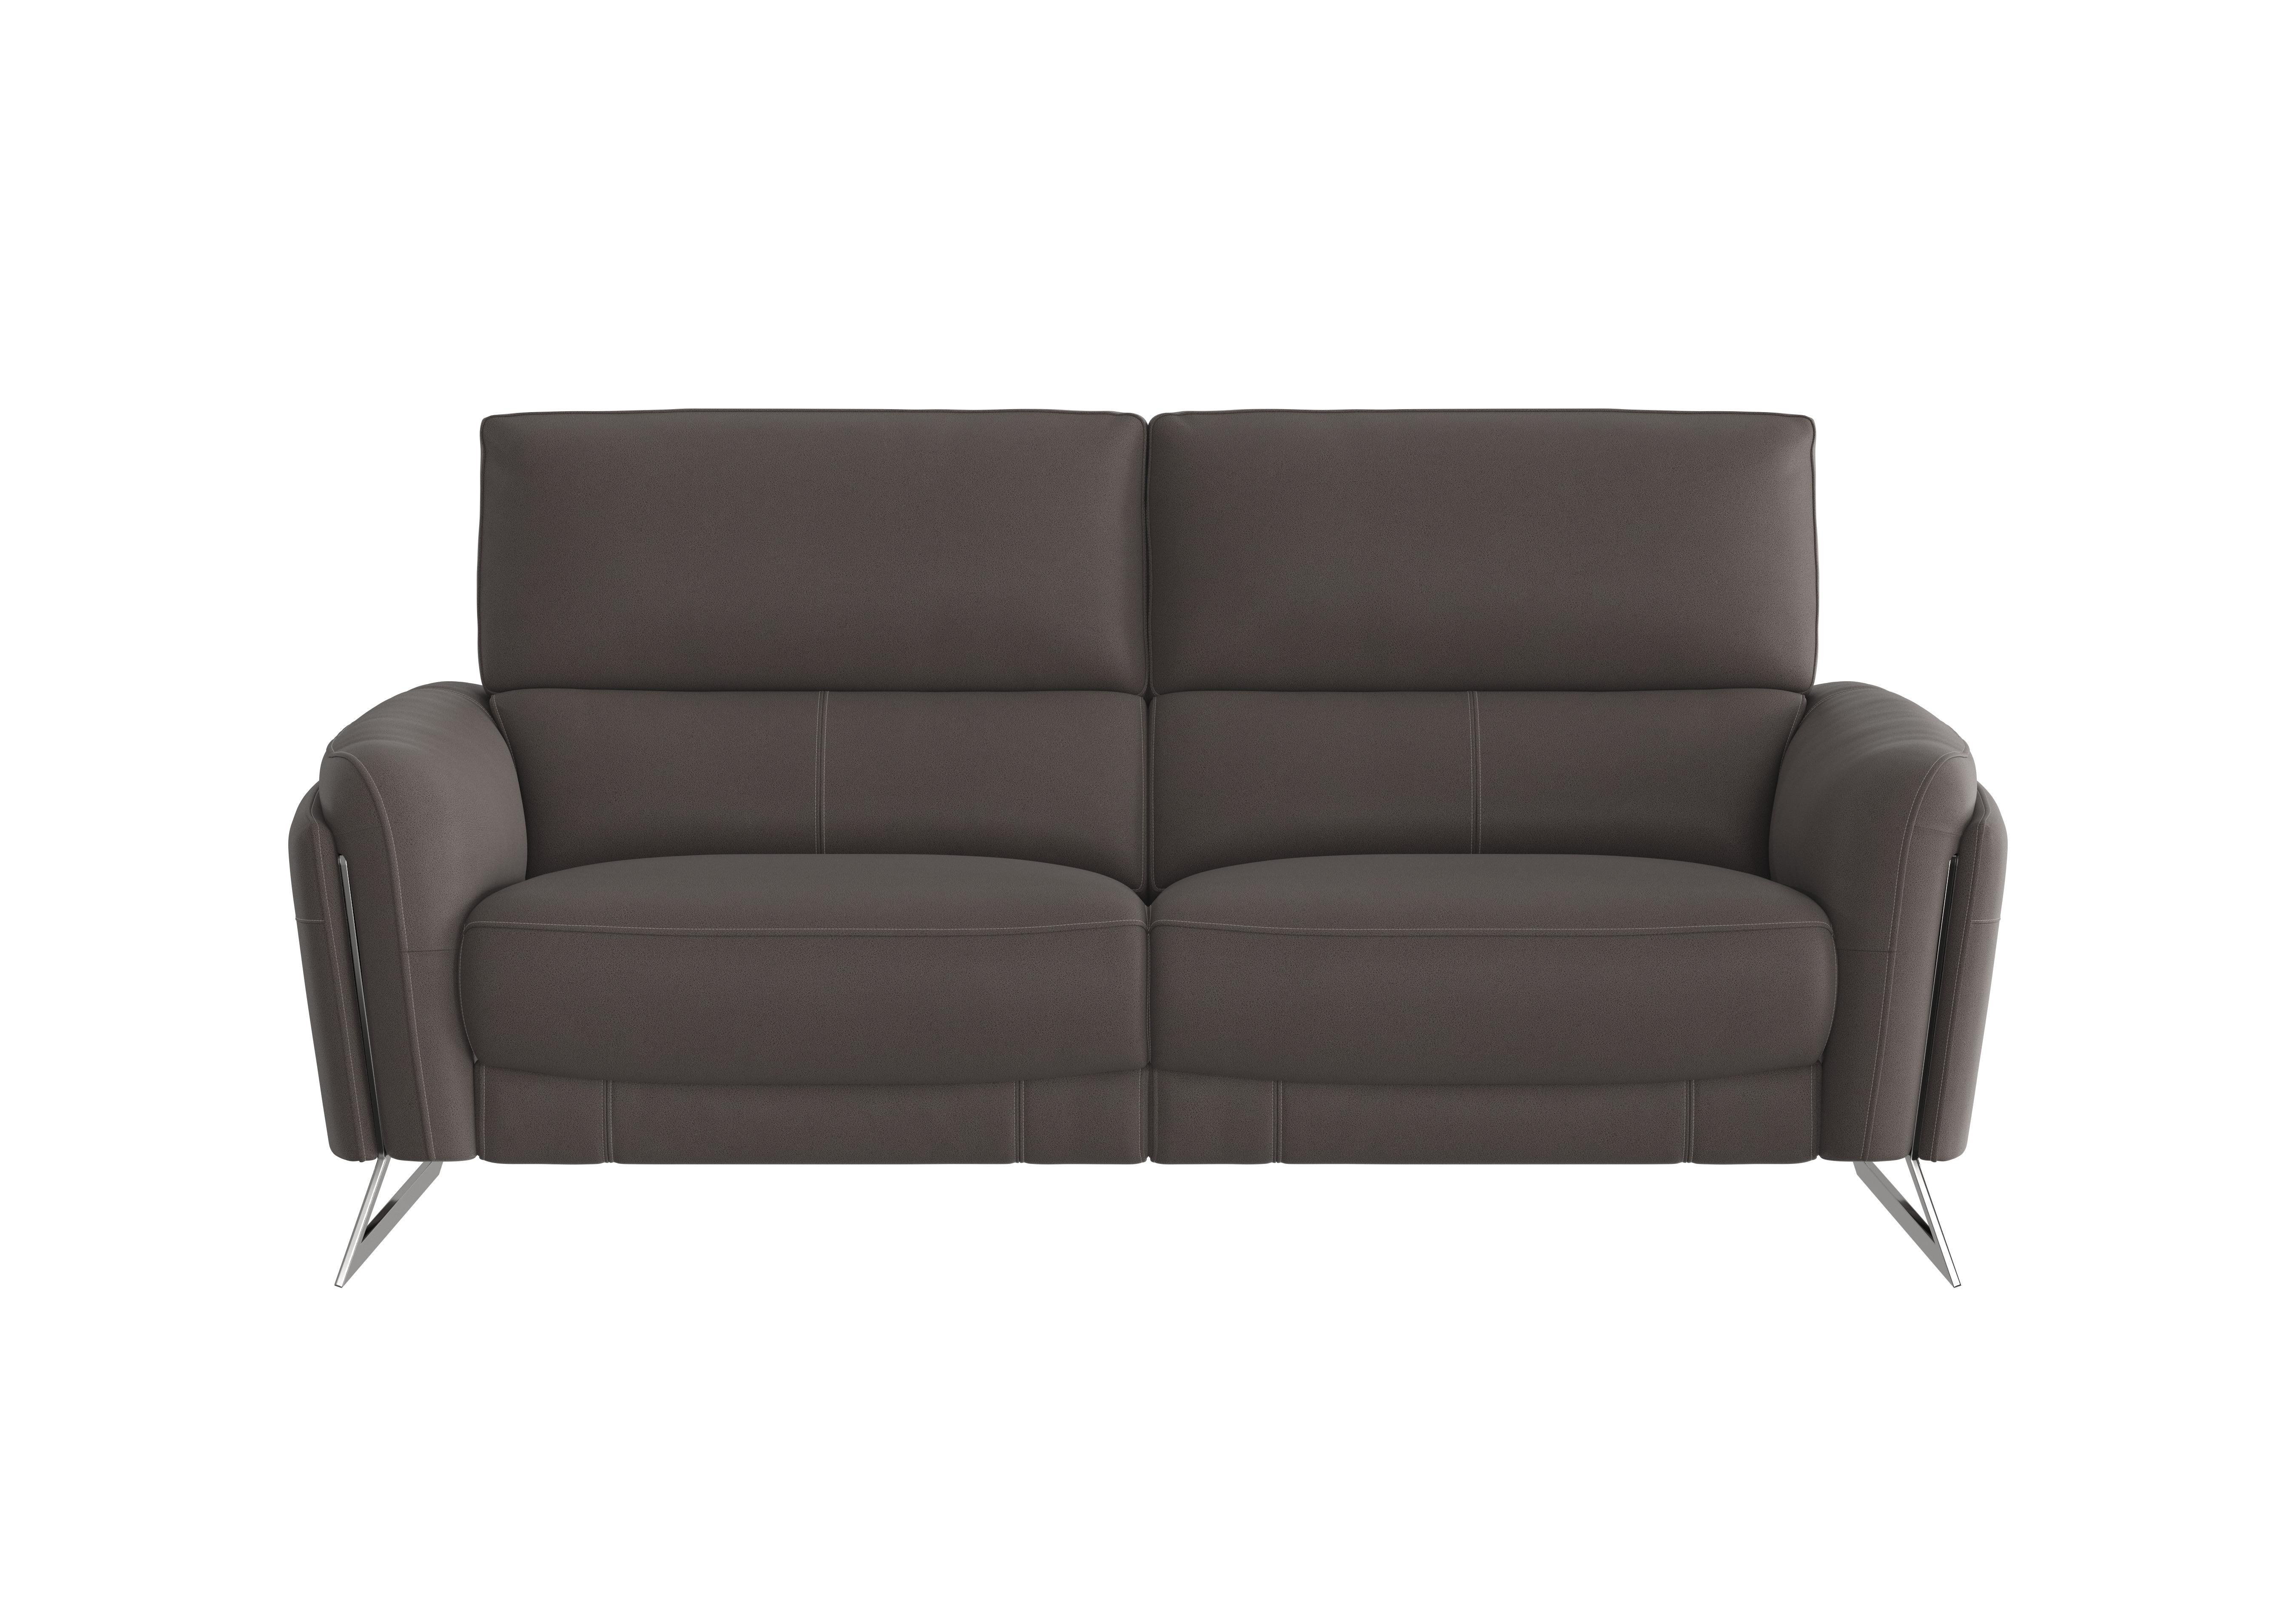 Amarilla 3 Seater Fabric Sofa in Bfa-Blj-R16 Grey on Furniture Village